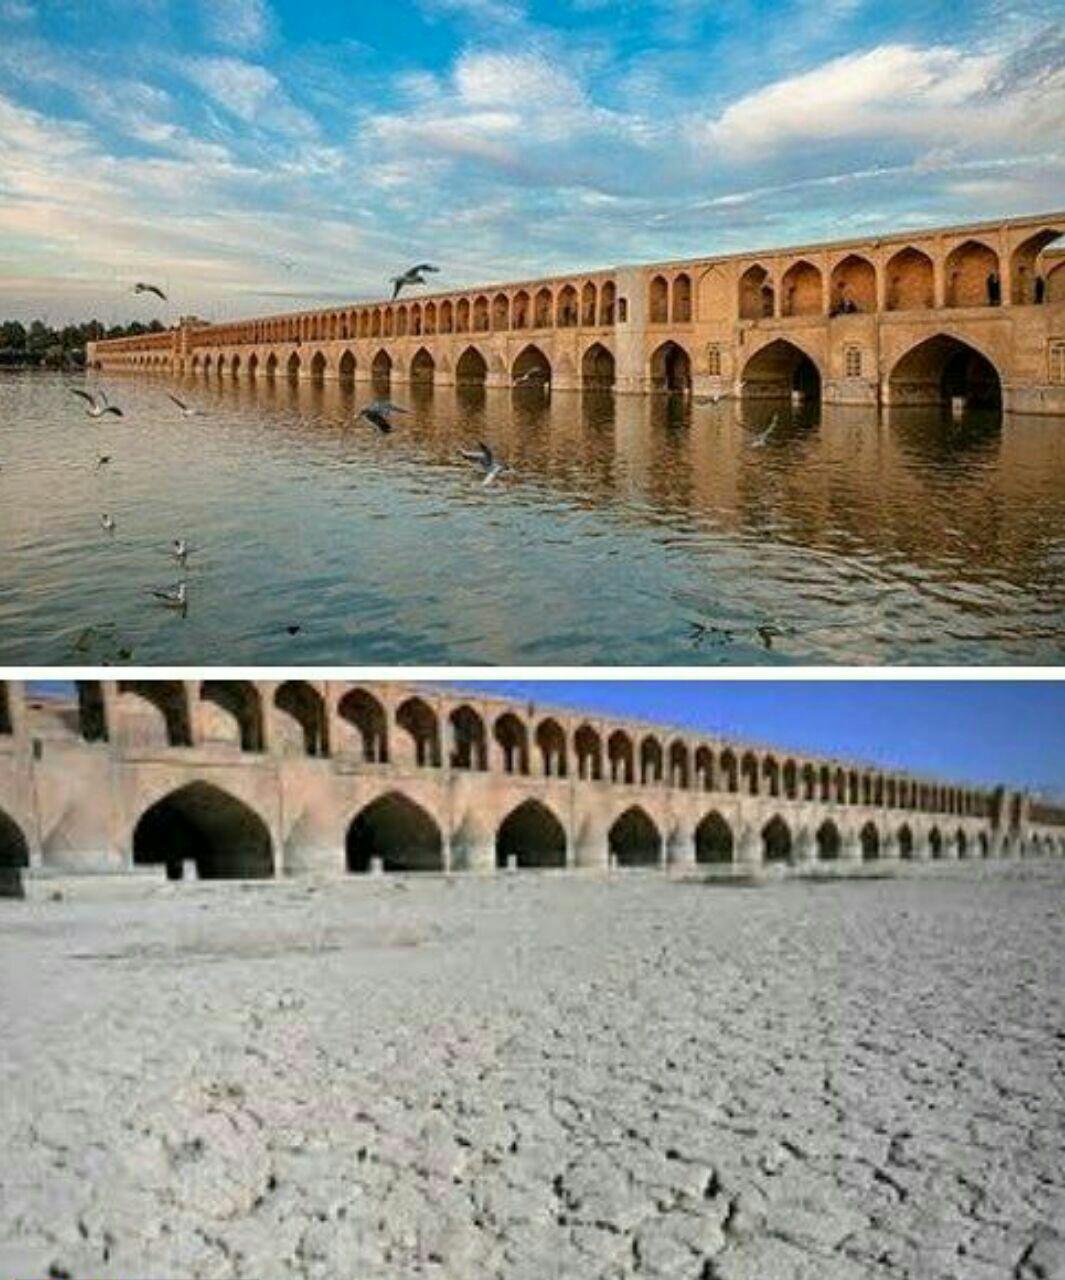 سی و سه پل اصفهان در چالش عکس ده سال قبل!